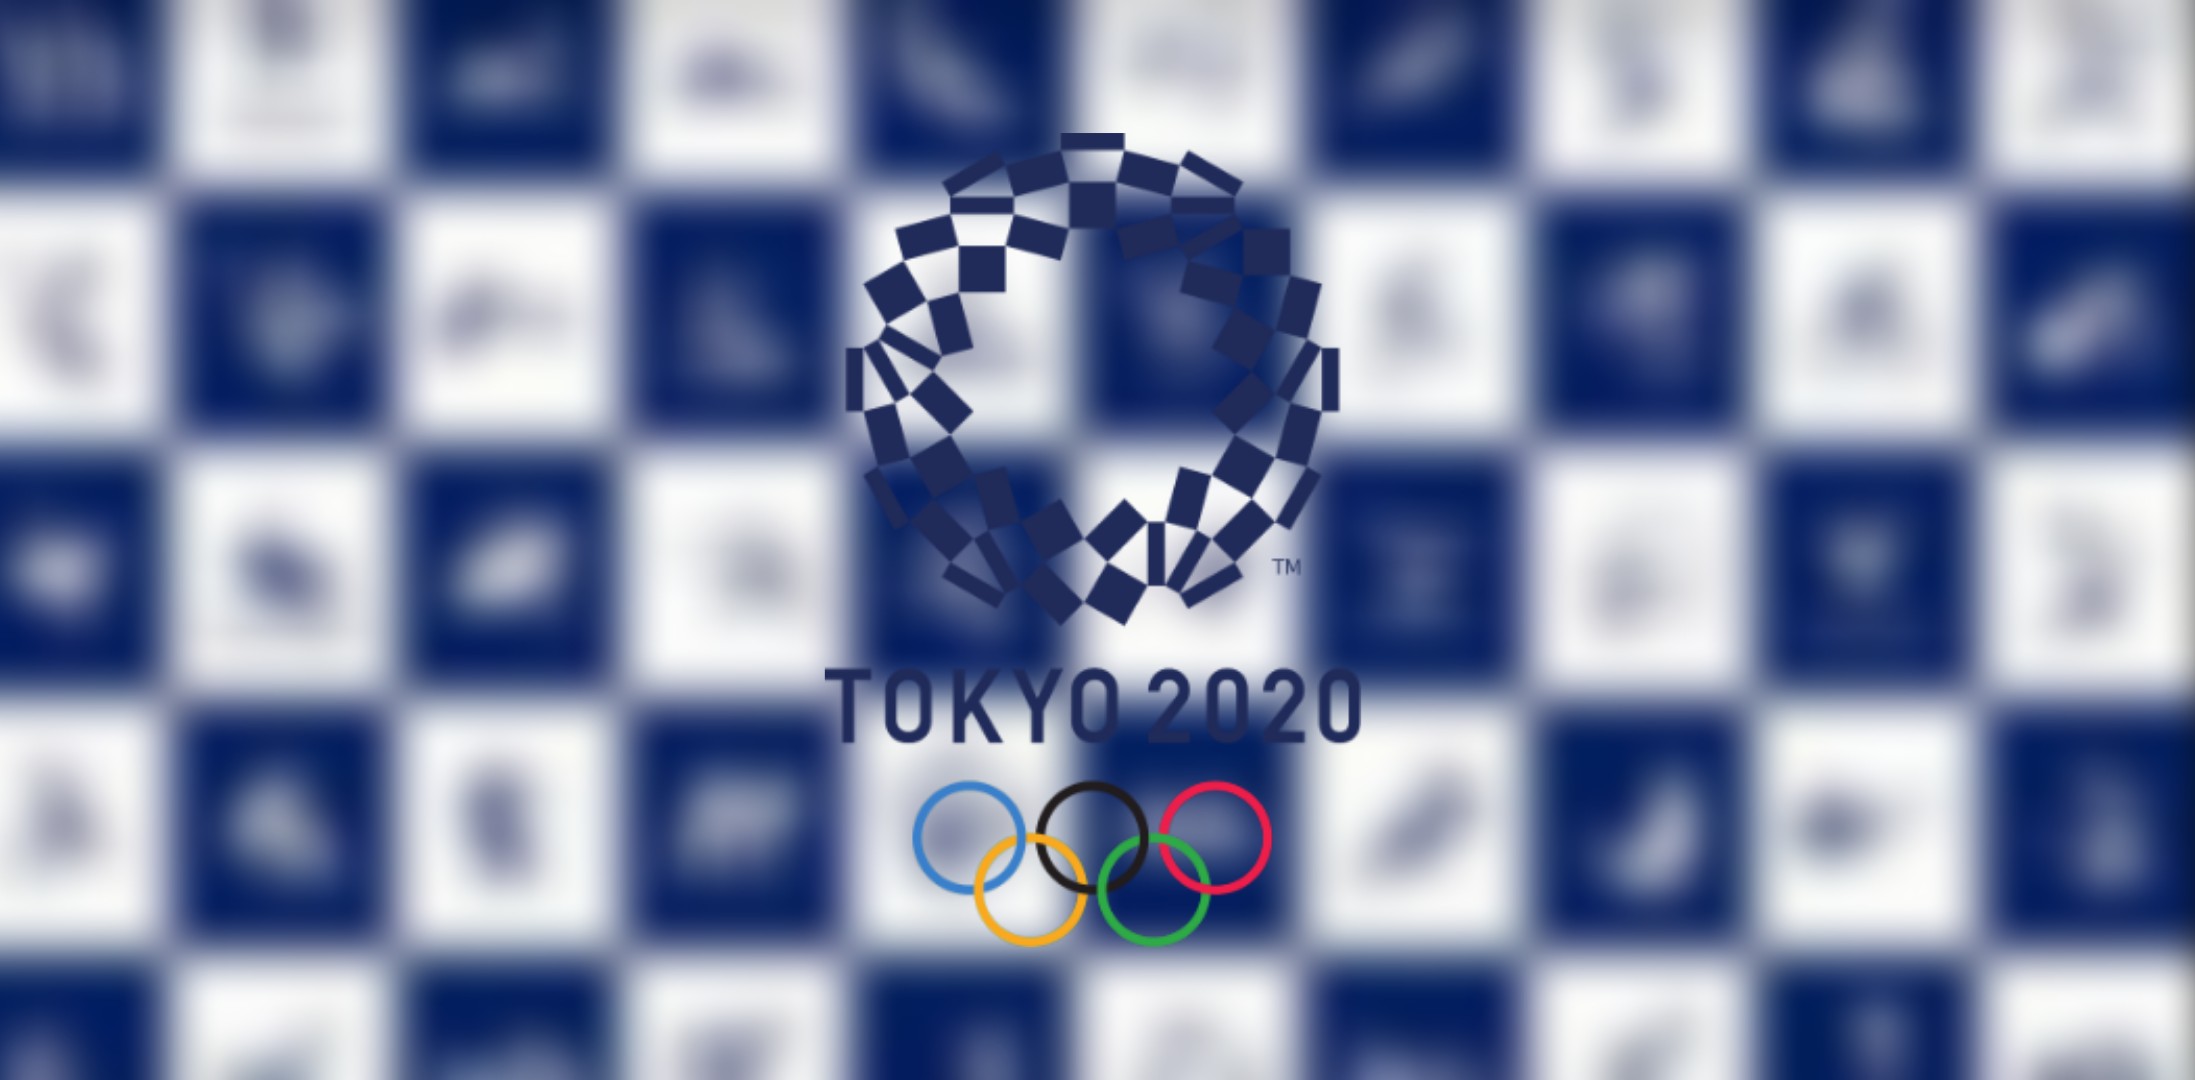 Jadual sukan olimpik 2020 malaysia